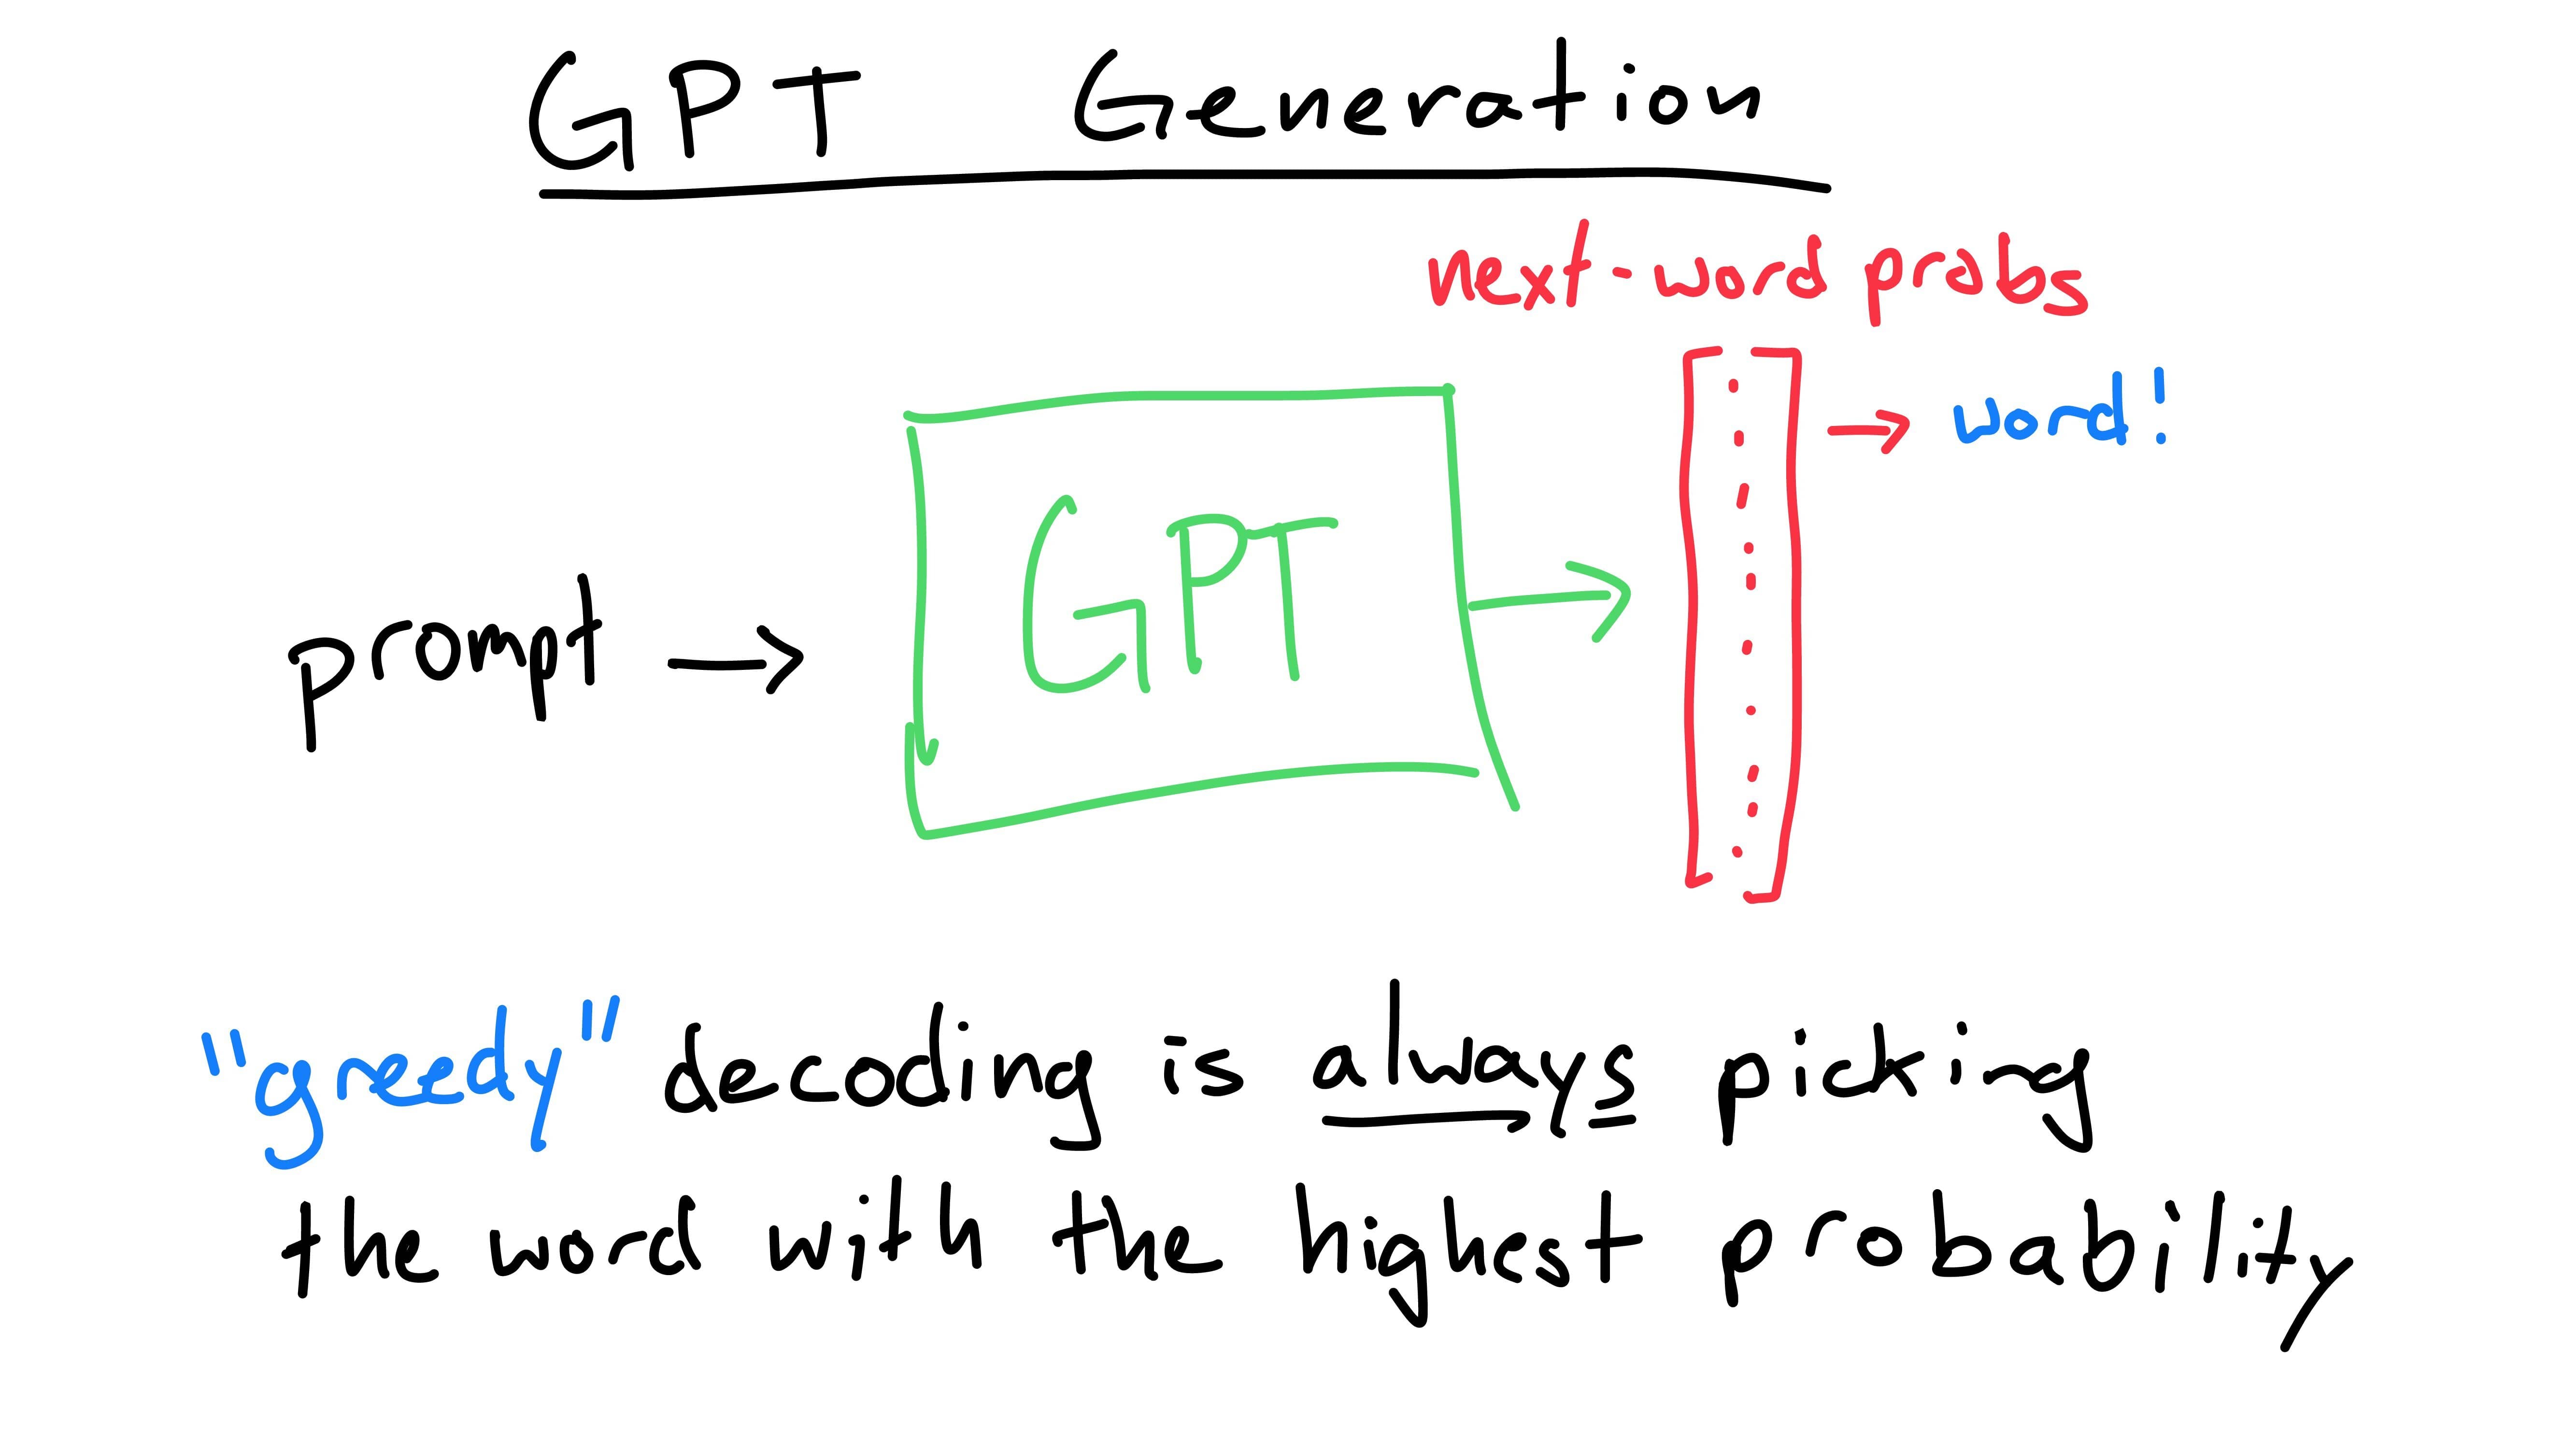 GPT probs - 2